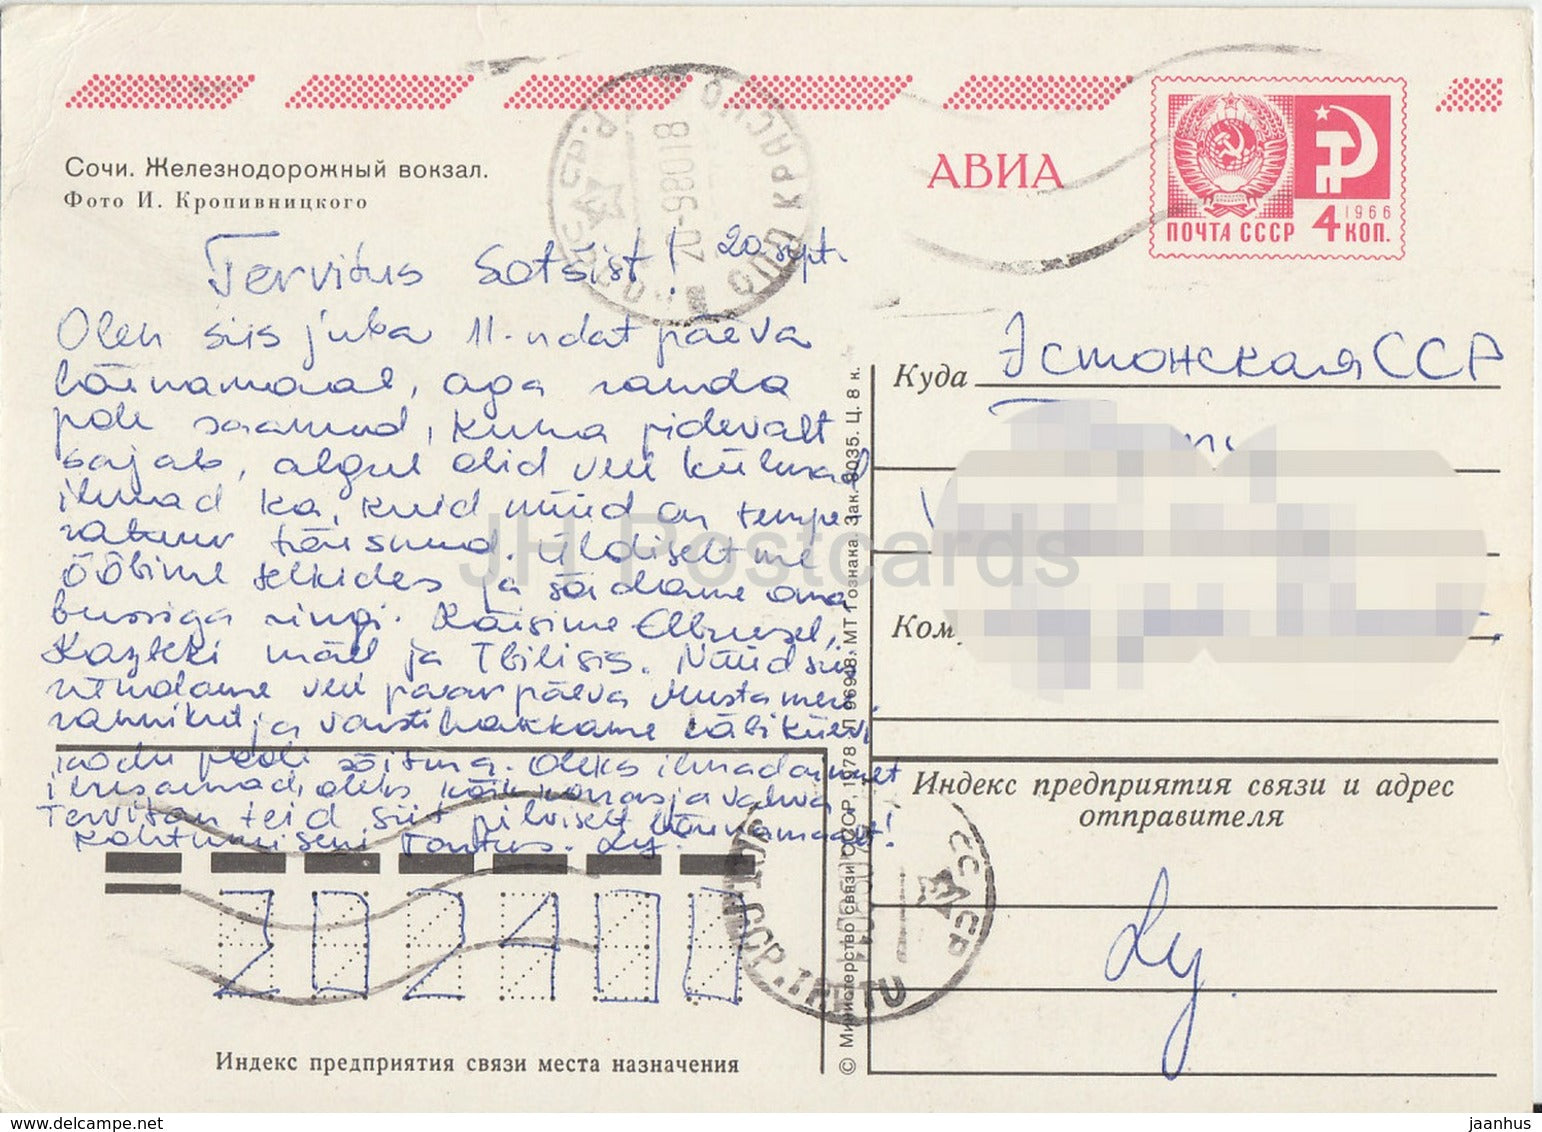 Sochi - railway station - bus Ikarus - AVIA - postal stationery - 1978 - Russia USSR - used - JH Postcards